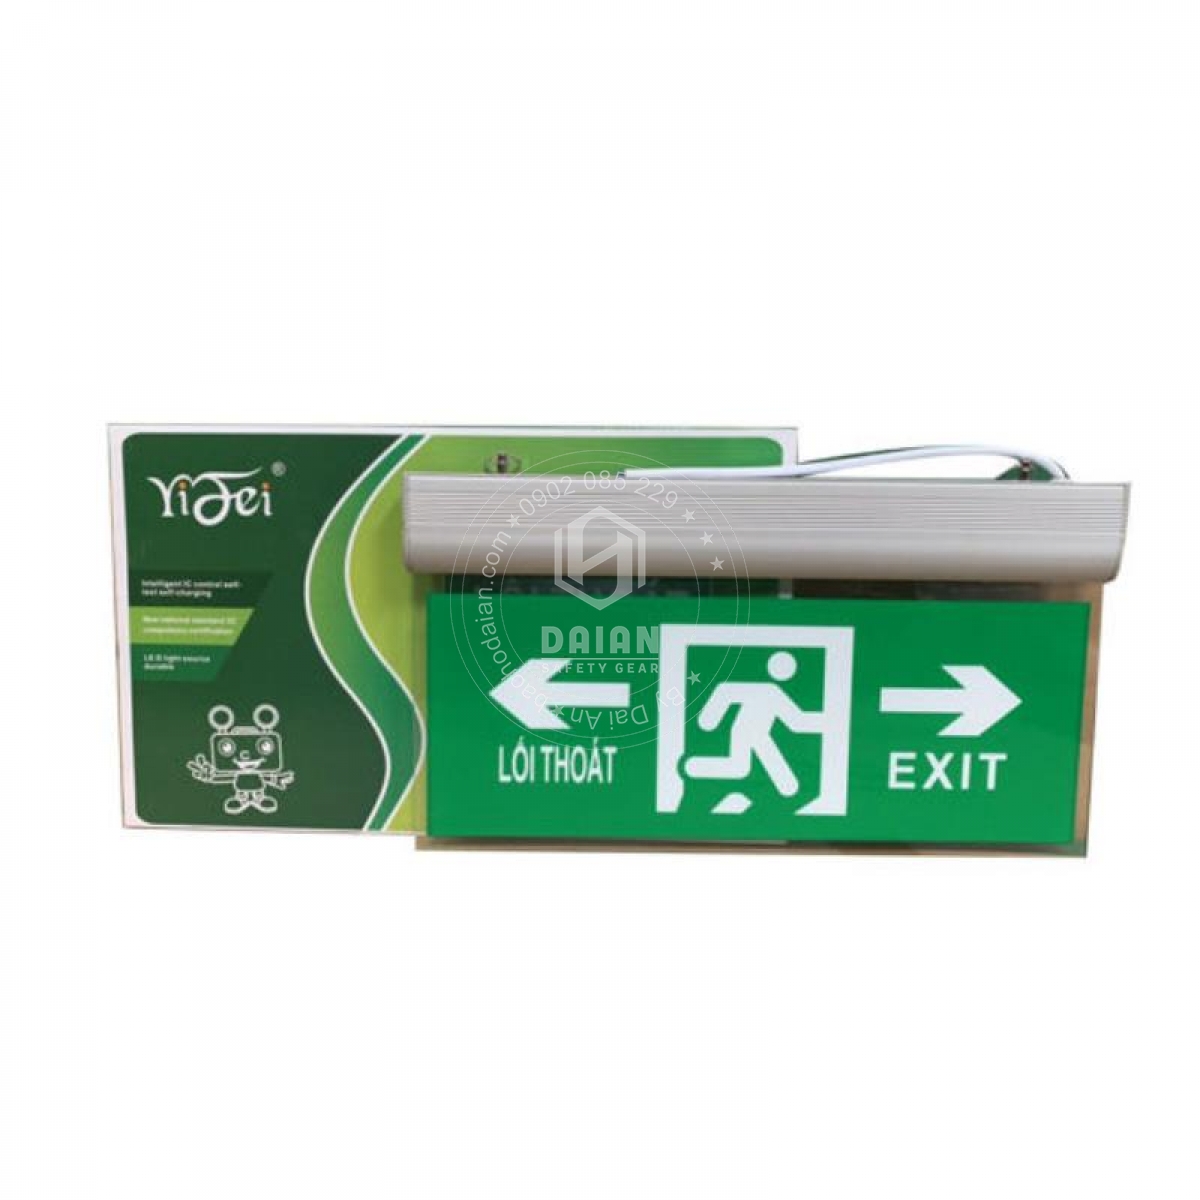 den-exit-thoat-hiem-yf1019-chi-hai-huong